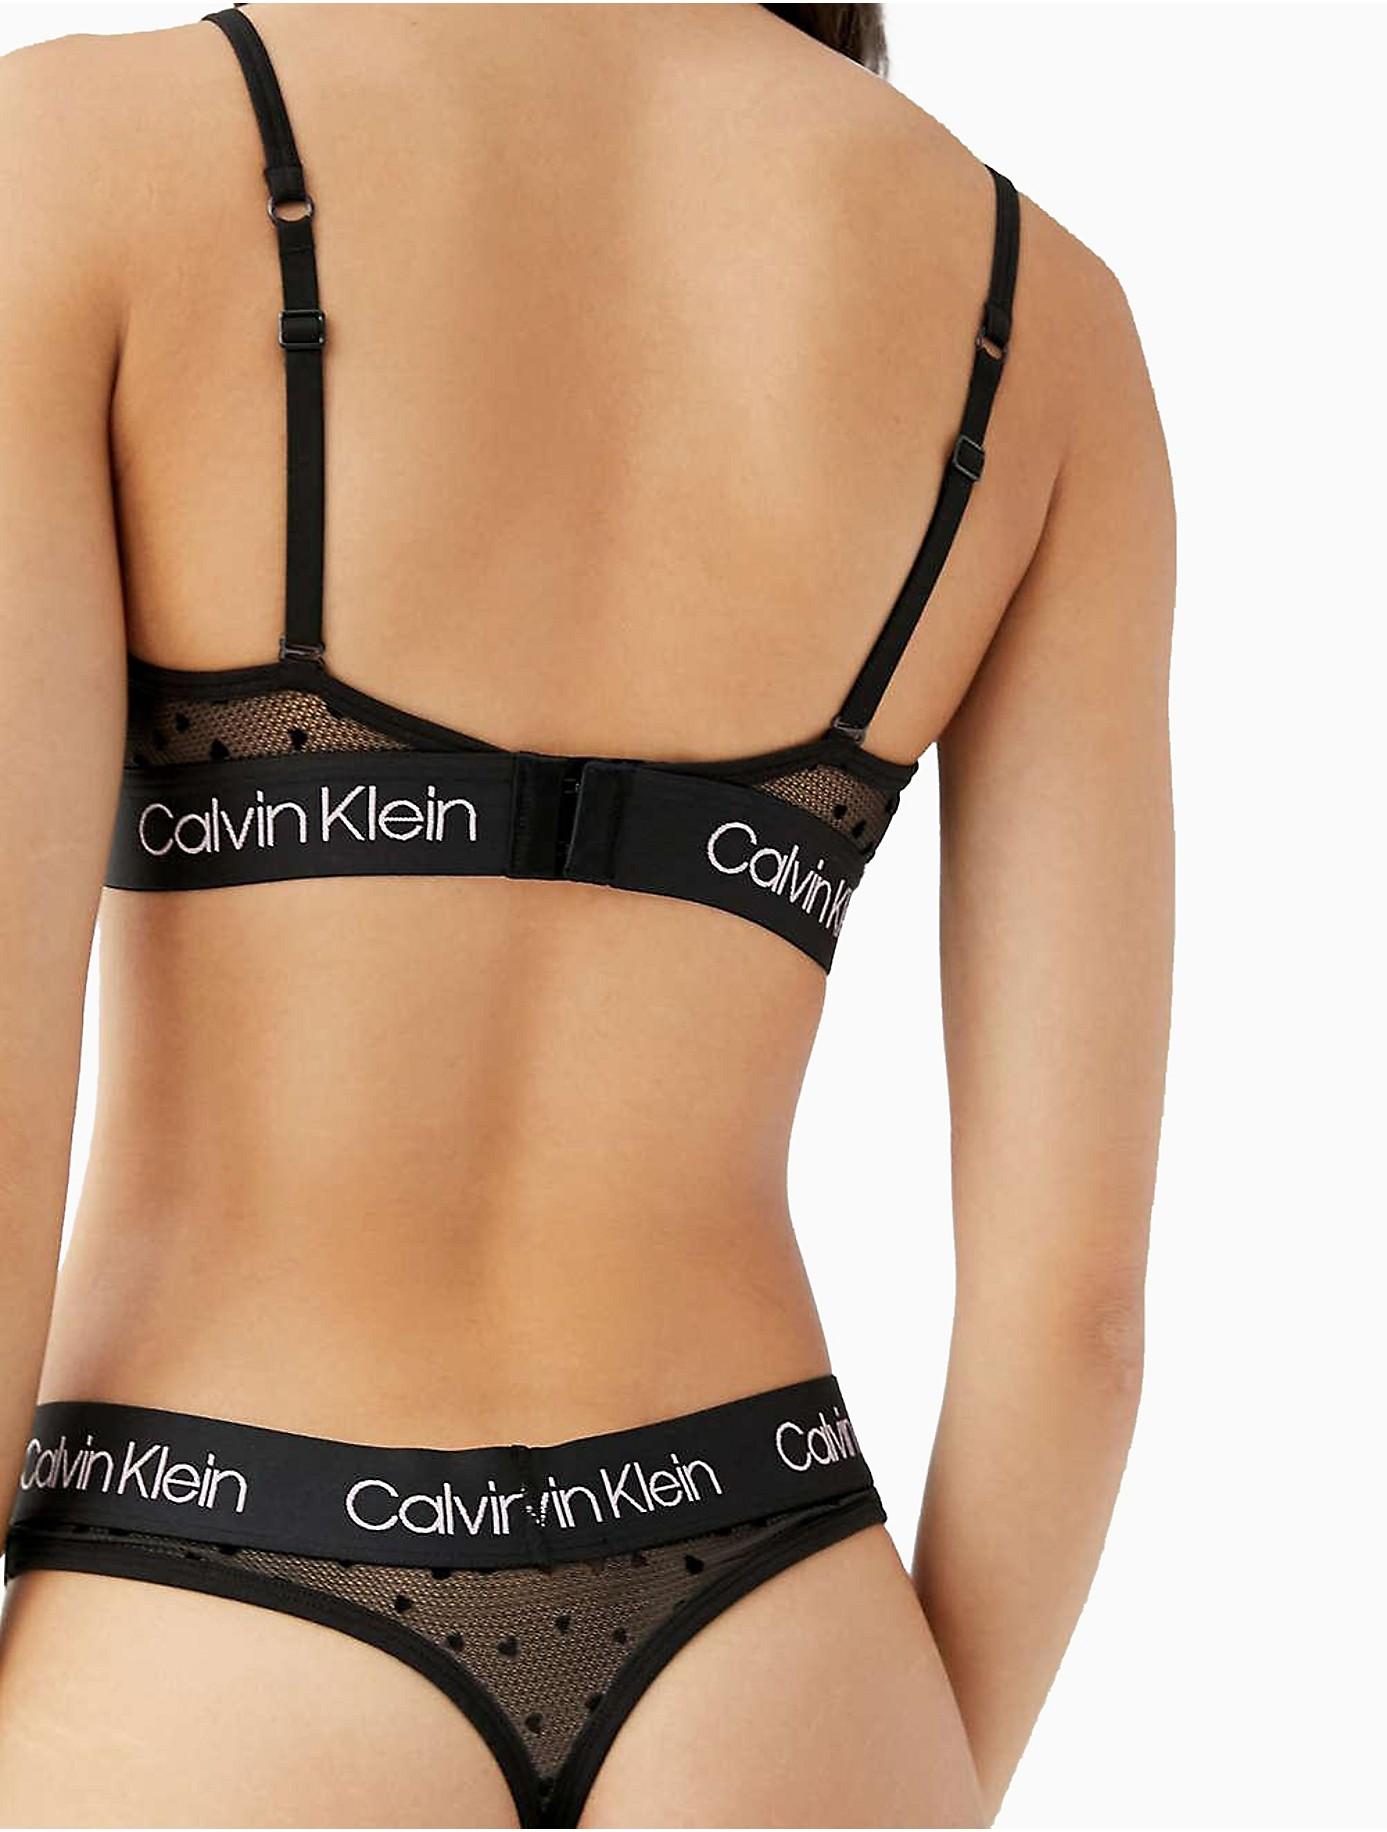 Buy Calvin Klein Underwear Trianlge Unlined Bra - Black